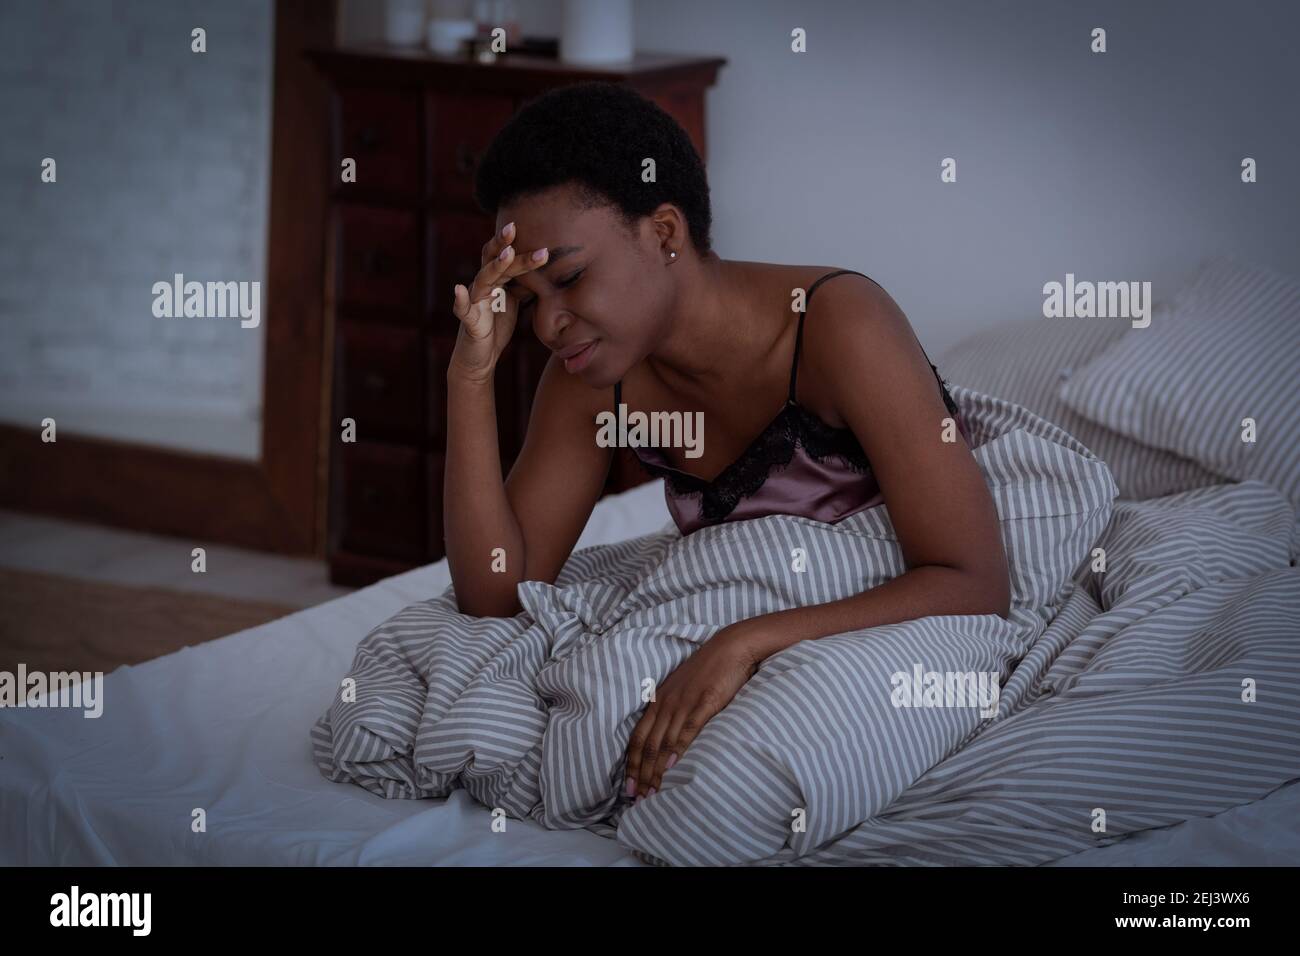 Migraine, pain, headache, loud neighbors, trouble sleeping and sad thoughts Stock Photo